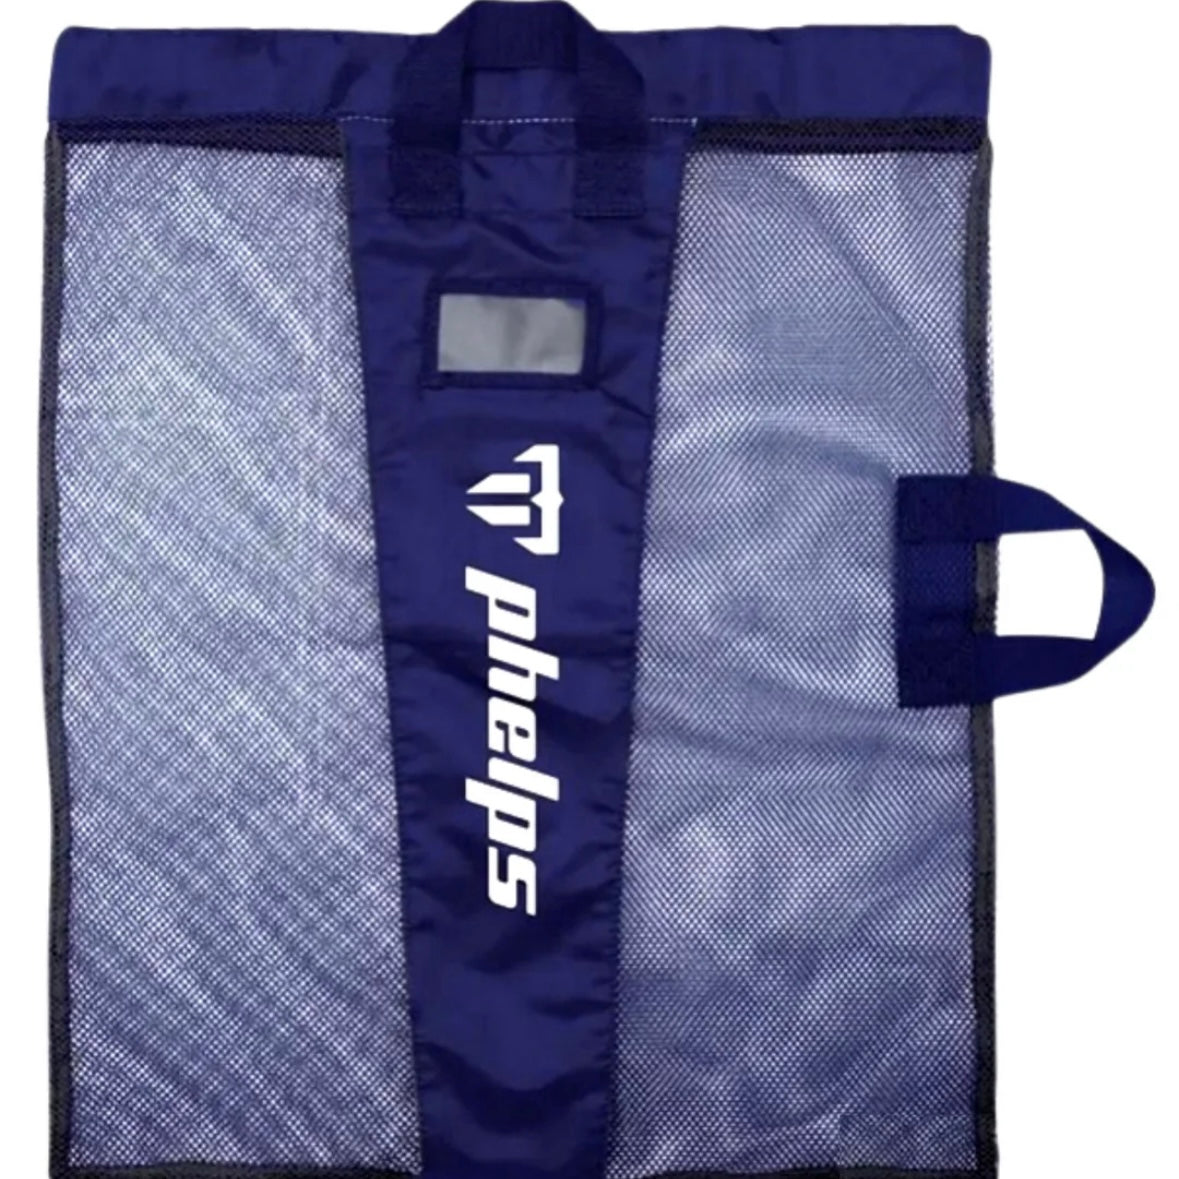 XL Michael Phelps MP 30" x 22" Mesh Navy Deck Bag - Gear & Beach Bag